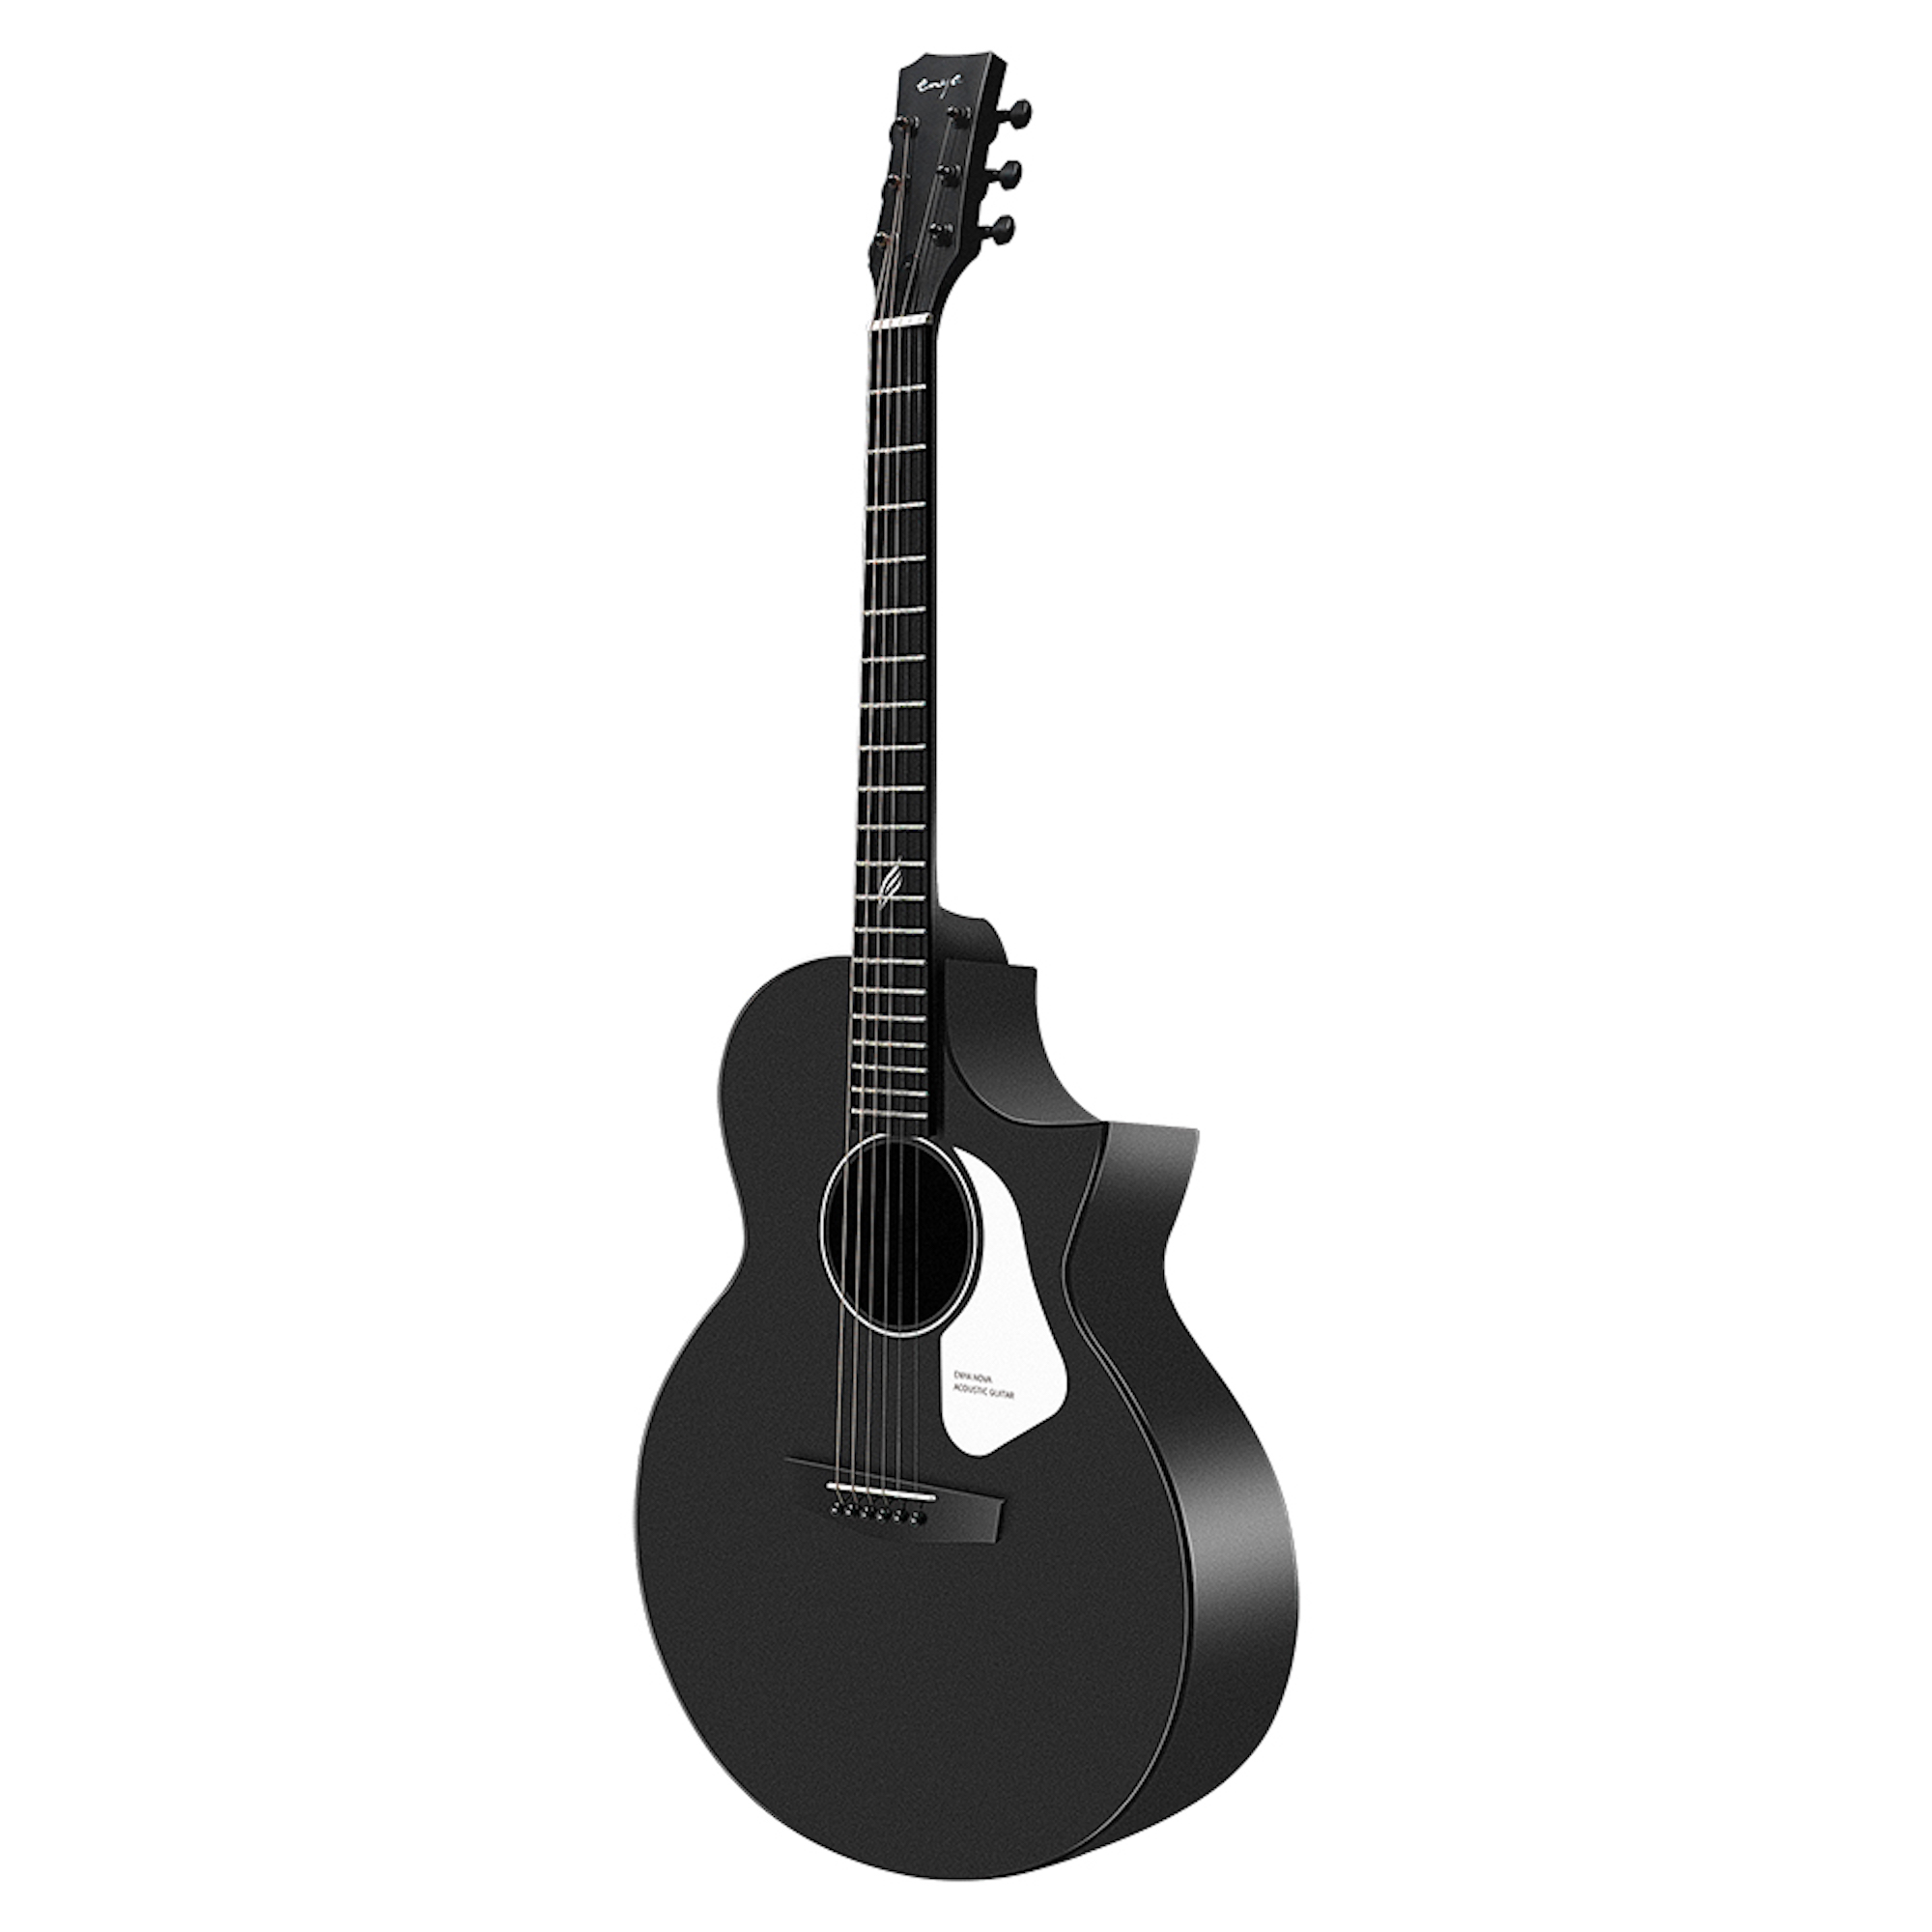 Enya Nova G Acoustic Guitar Black online price in india